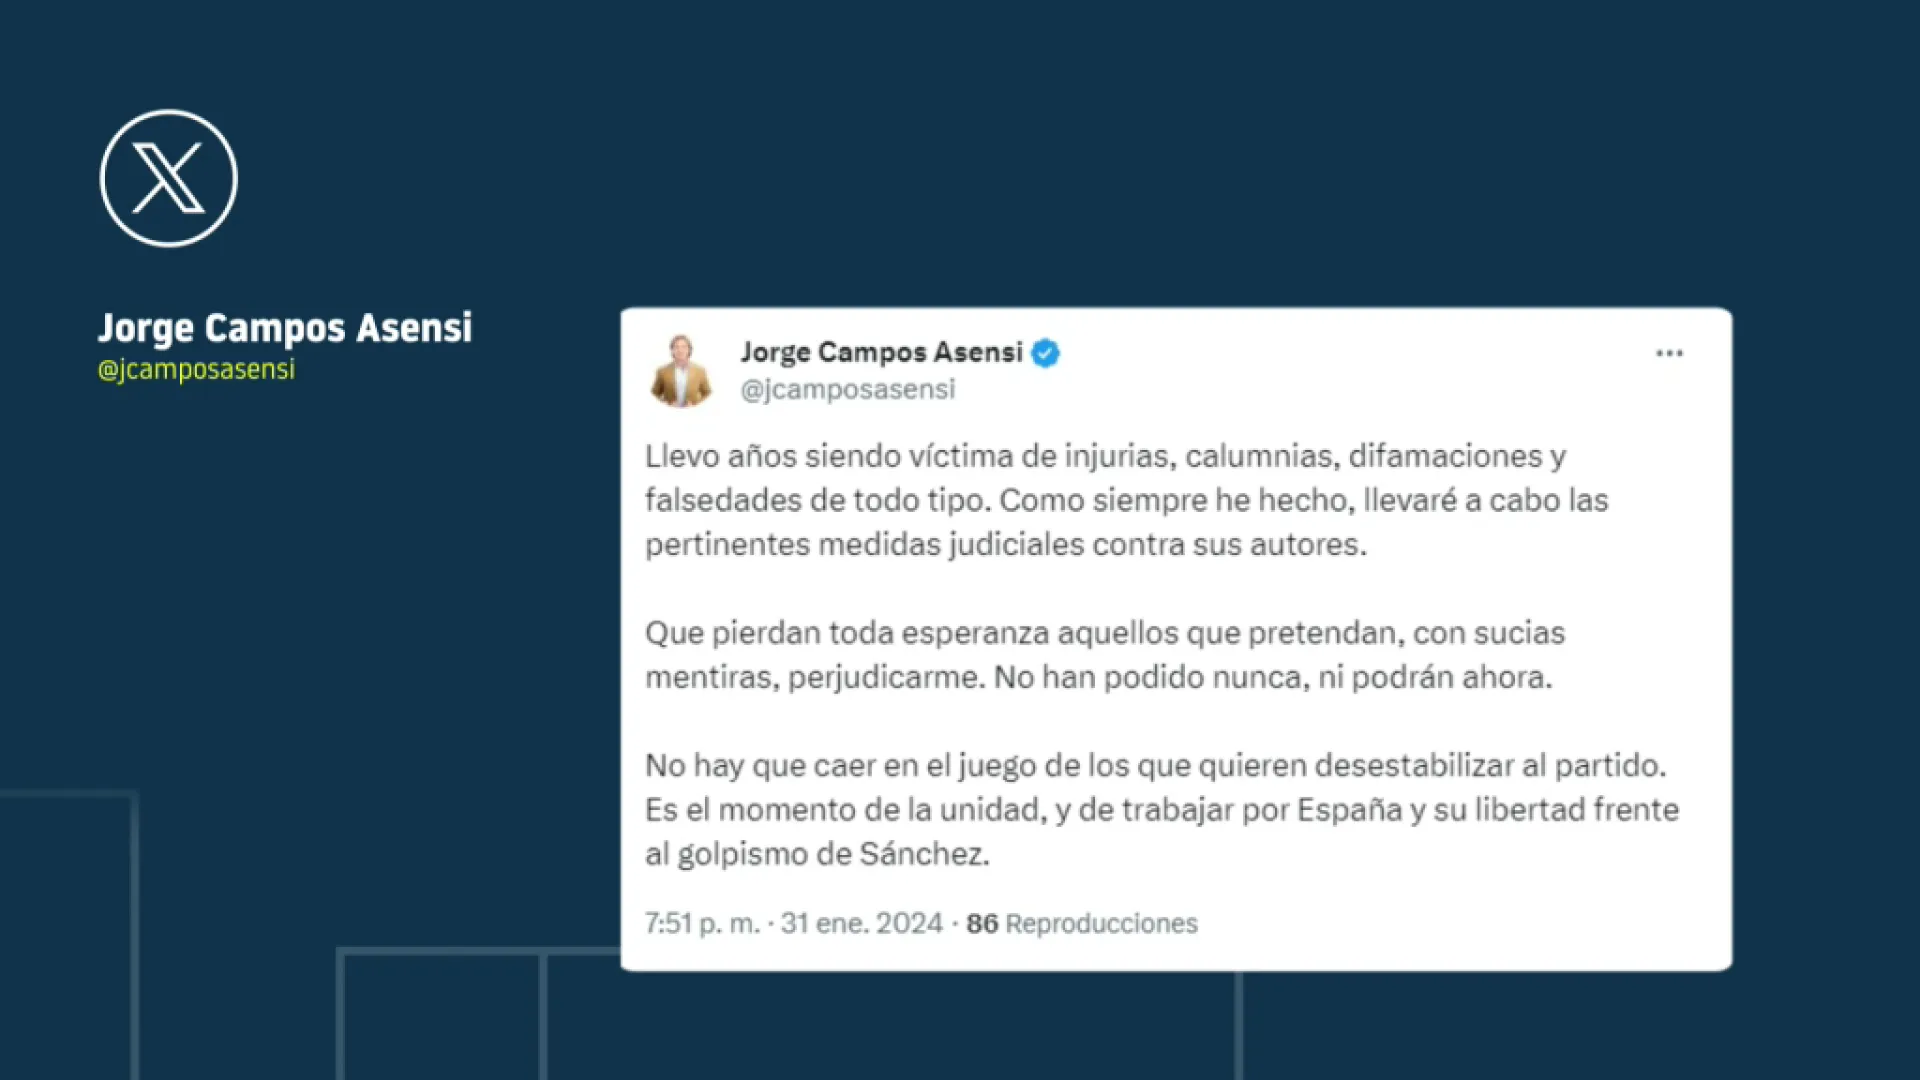 Patricia de las Heras hauria remès a la direcció nacional de Vox un informe amb greus acusacions contra Jorge Campos